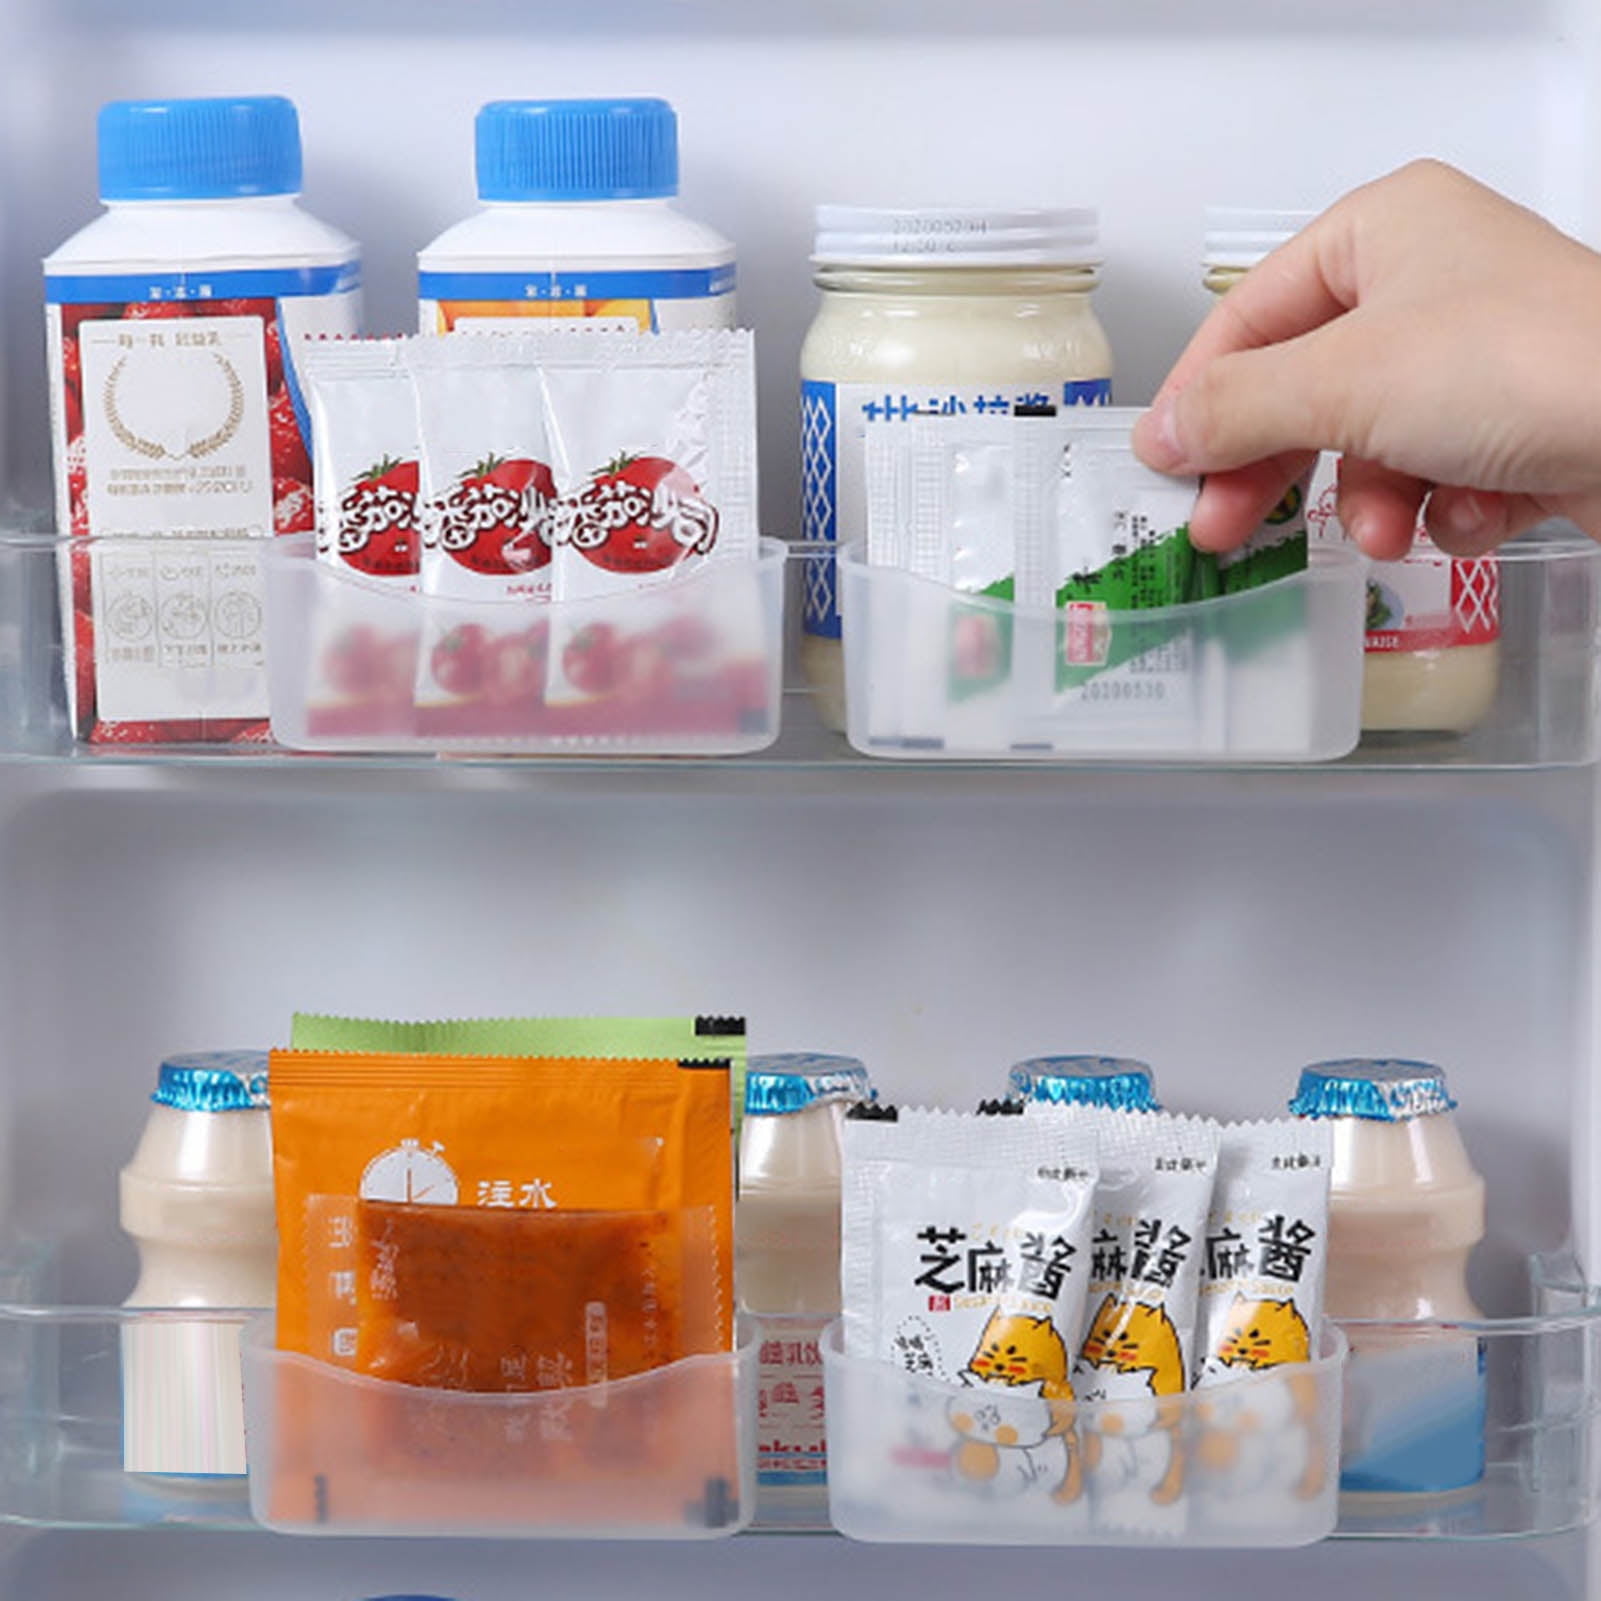 WEPSEN Set of 6 Refrigerator Organizer Bin Clear Plastic Stackable